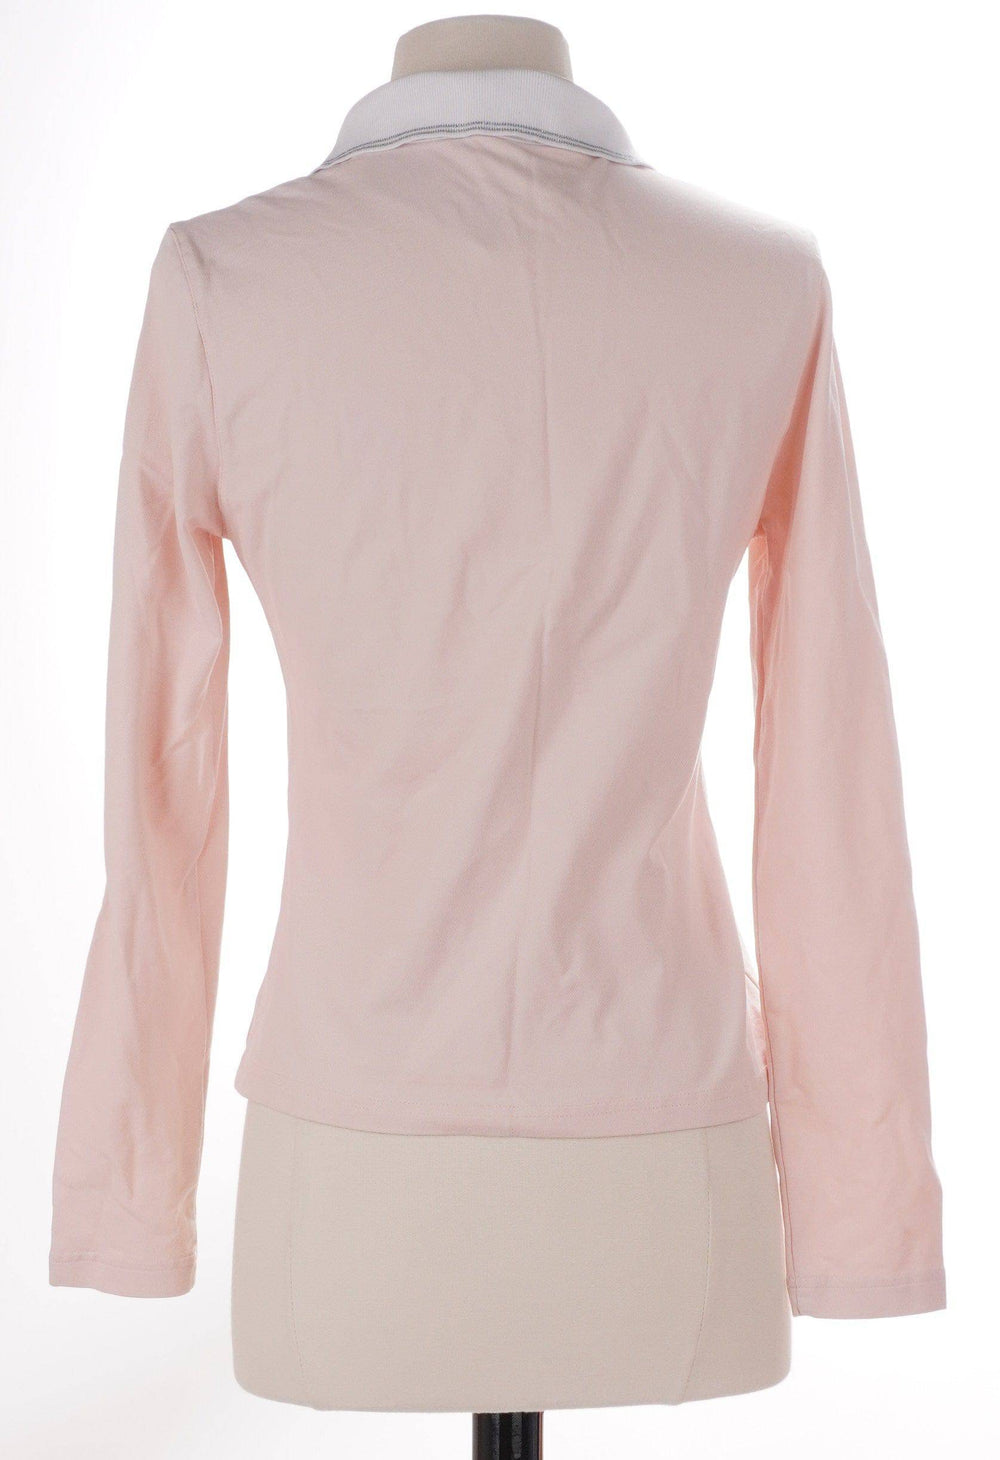 Golfino Medium / Pink / Consigned Golfino Pink Long Sleeve - Size Medium